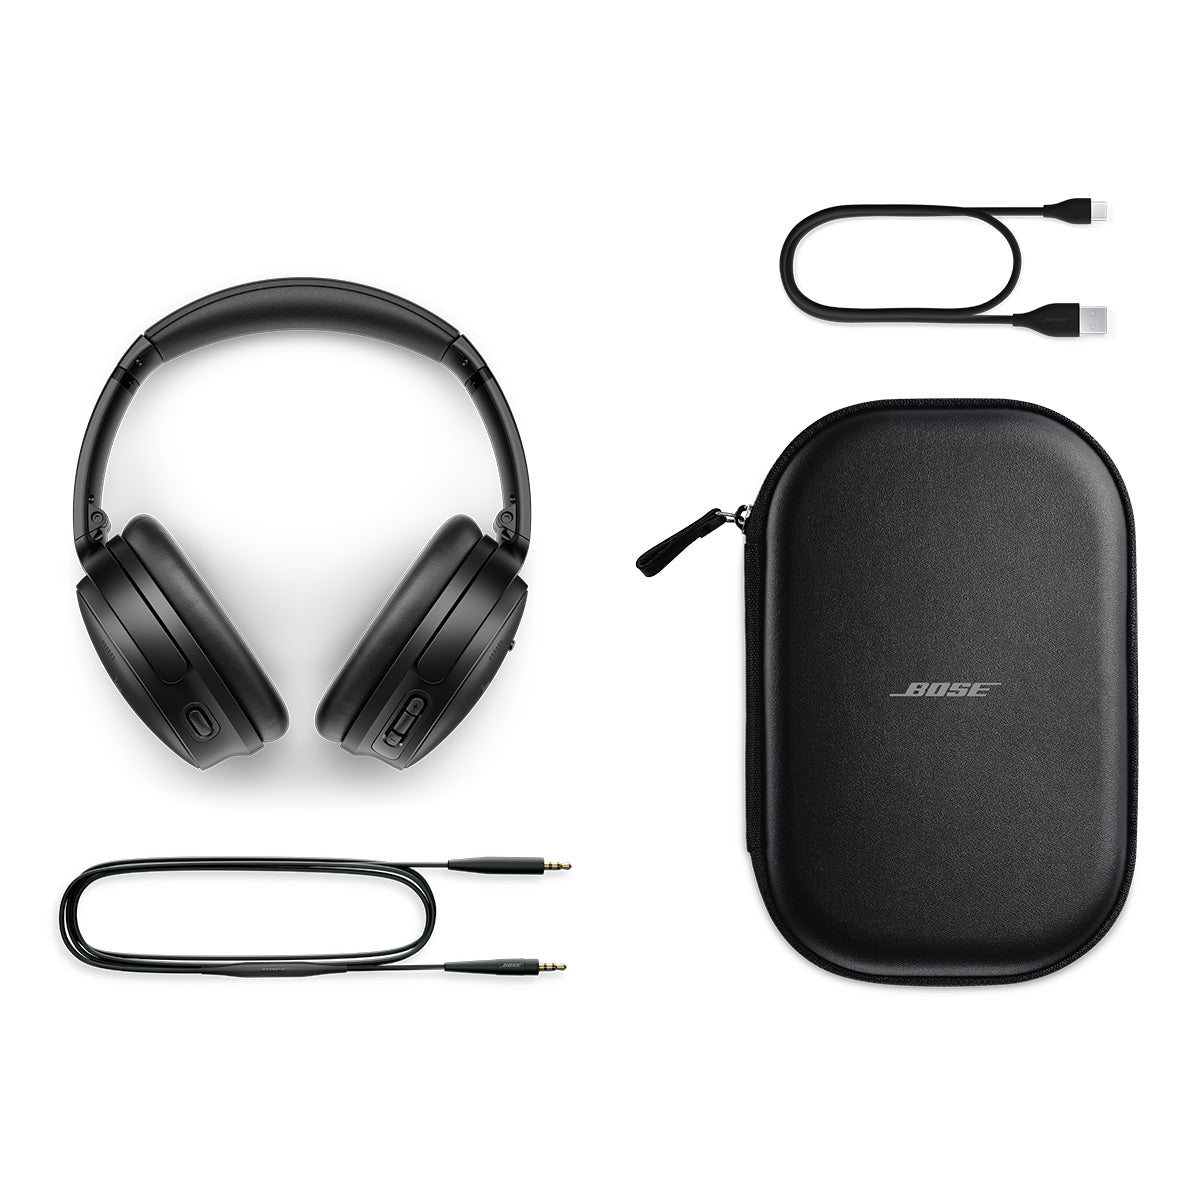 Bose QuietComfort Headphones with Active Noise Cancellation (Black)